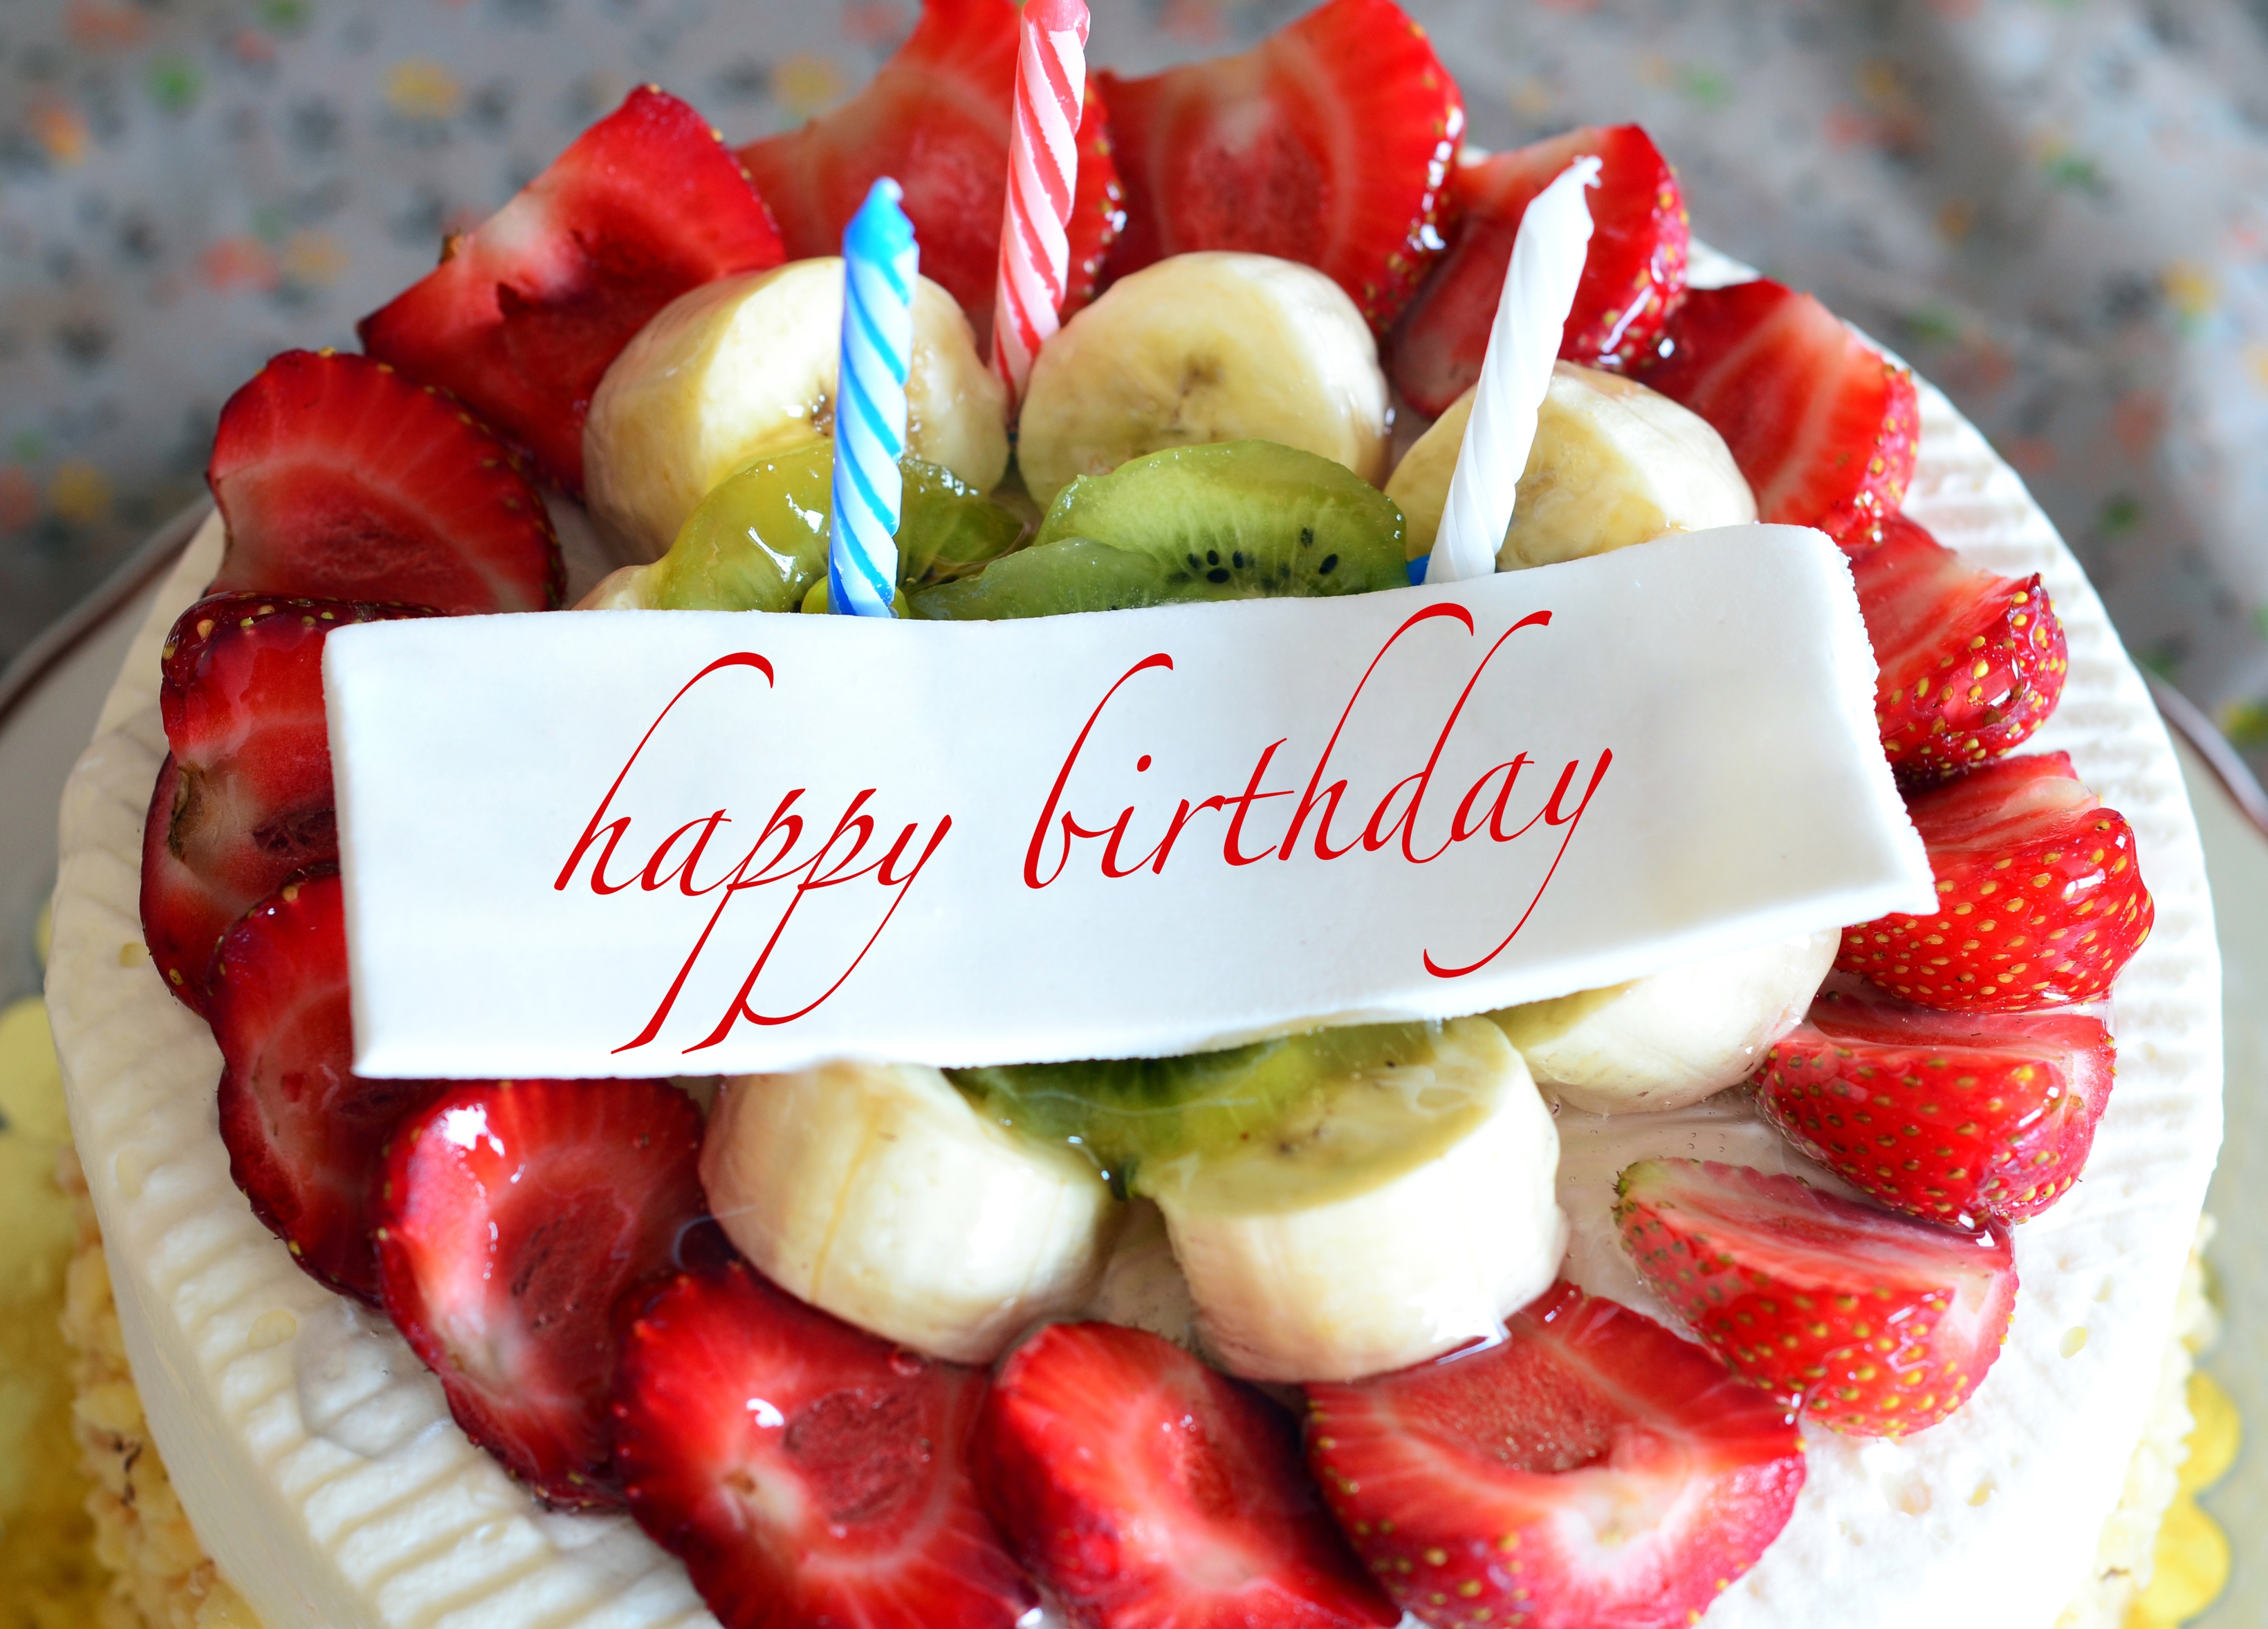 Открытка торт с днем рождения женщине. Торт с днем рождения!. Торт с днём рождения картинки. Открытка с днём рождения тортик. Открытки с днем рождения с фруктами.